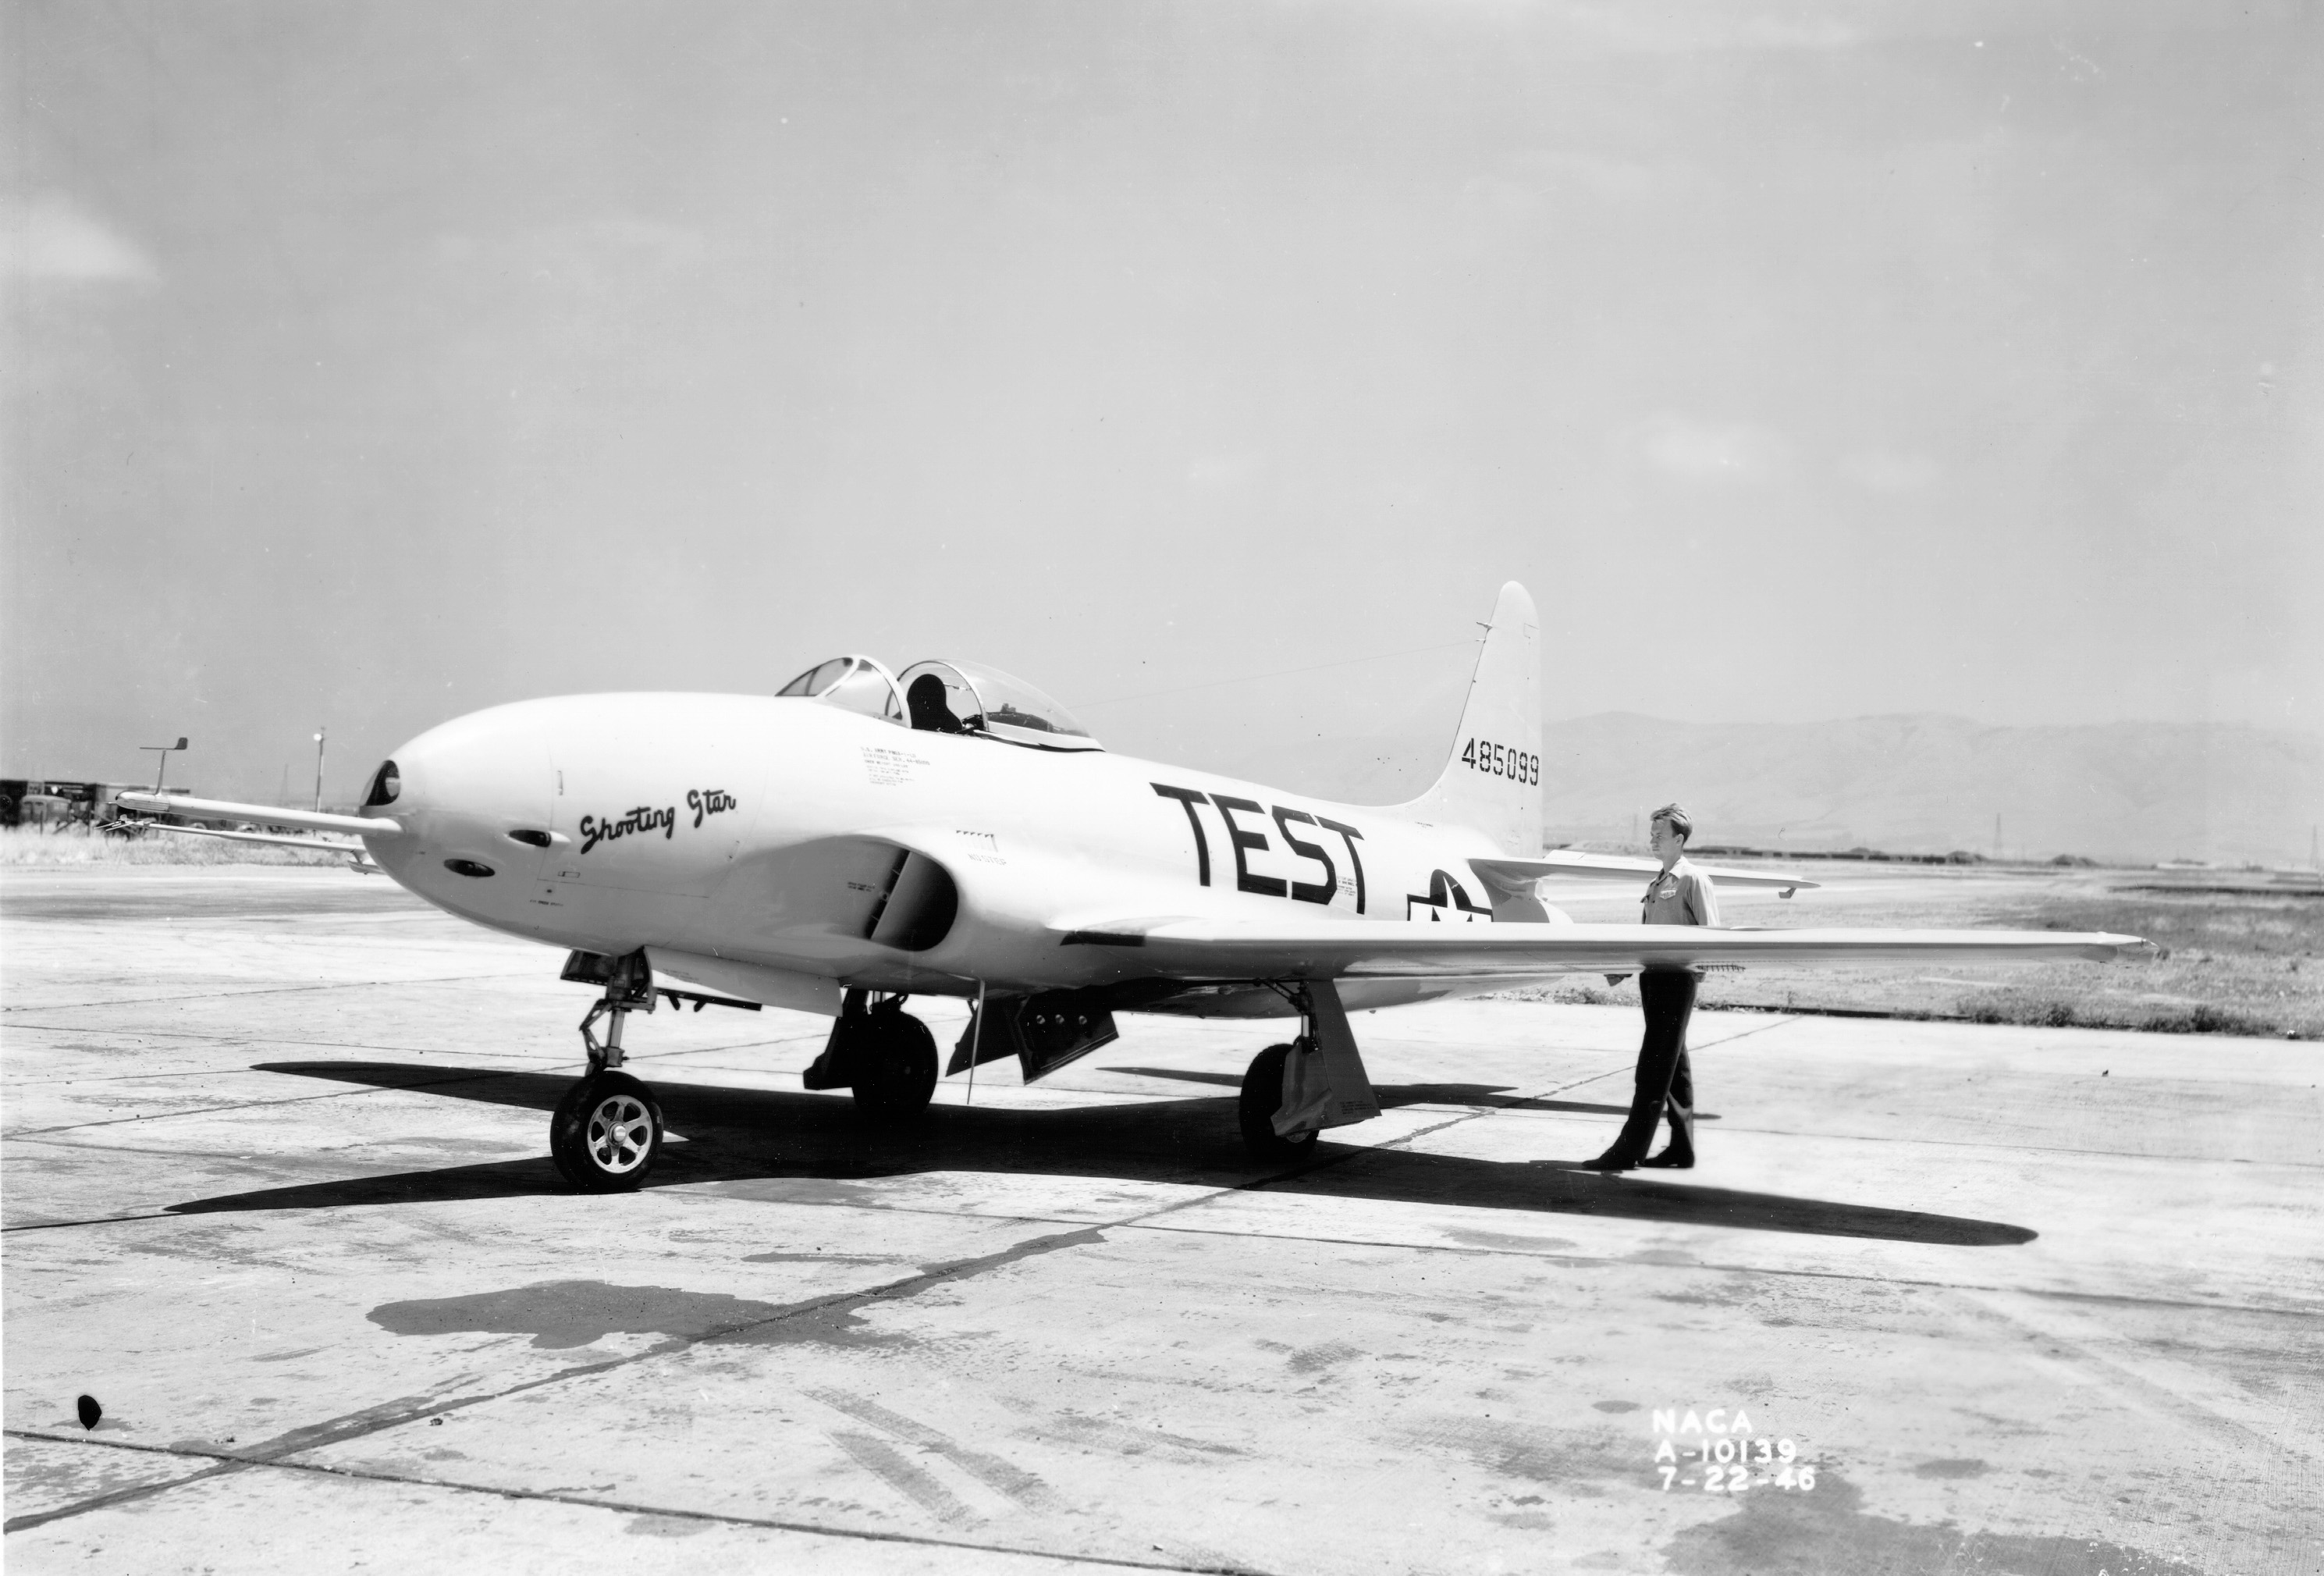 P-80A Shooting Star aircraft, Ames Aeronautical Laboratory, Moffet Field, California, United States, 22 July 1946